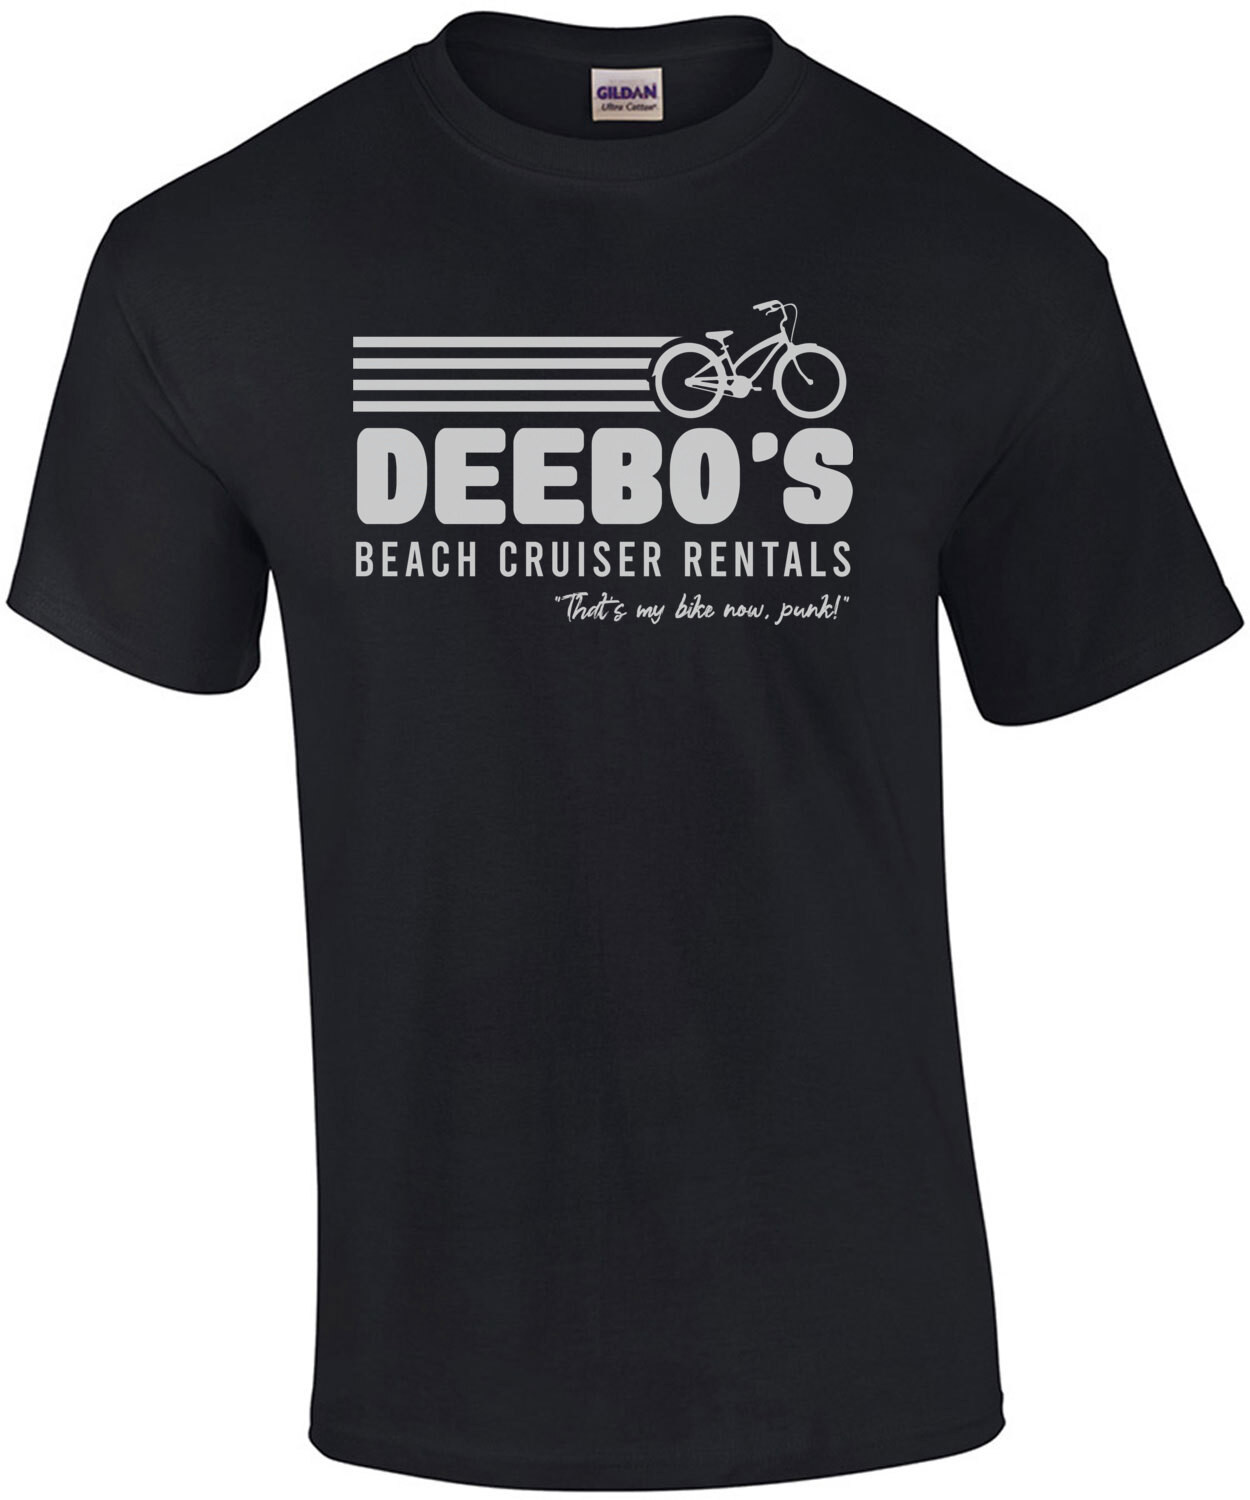 Deebo's Beach Cruise Rentals - Friday Movie - 90's T-Shirt